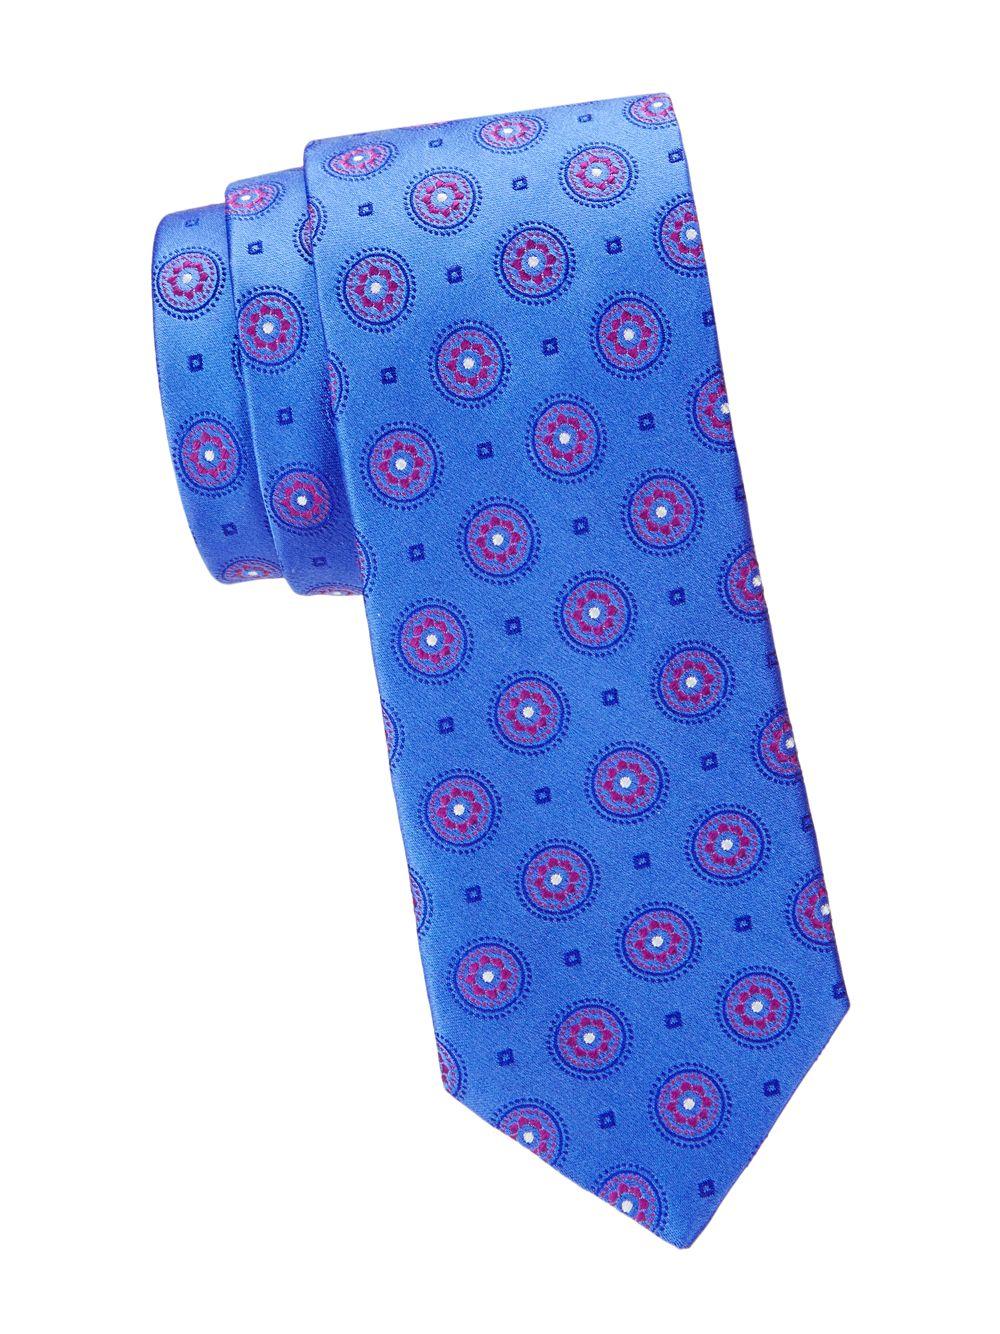 Saks Fifth Avenue Medallion Silk Tie in Blue for Men - Lyst